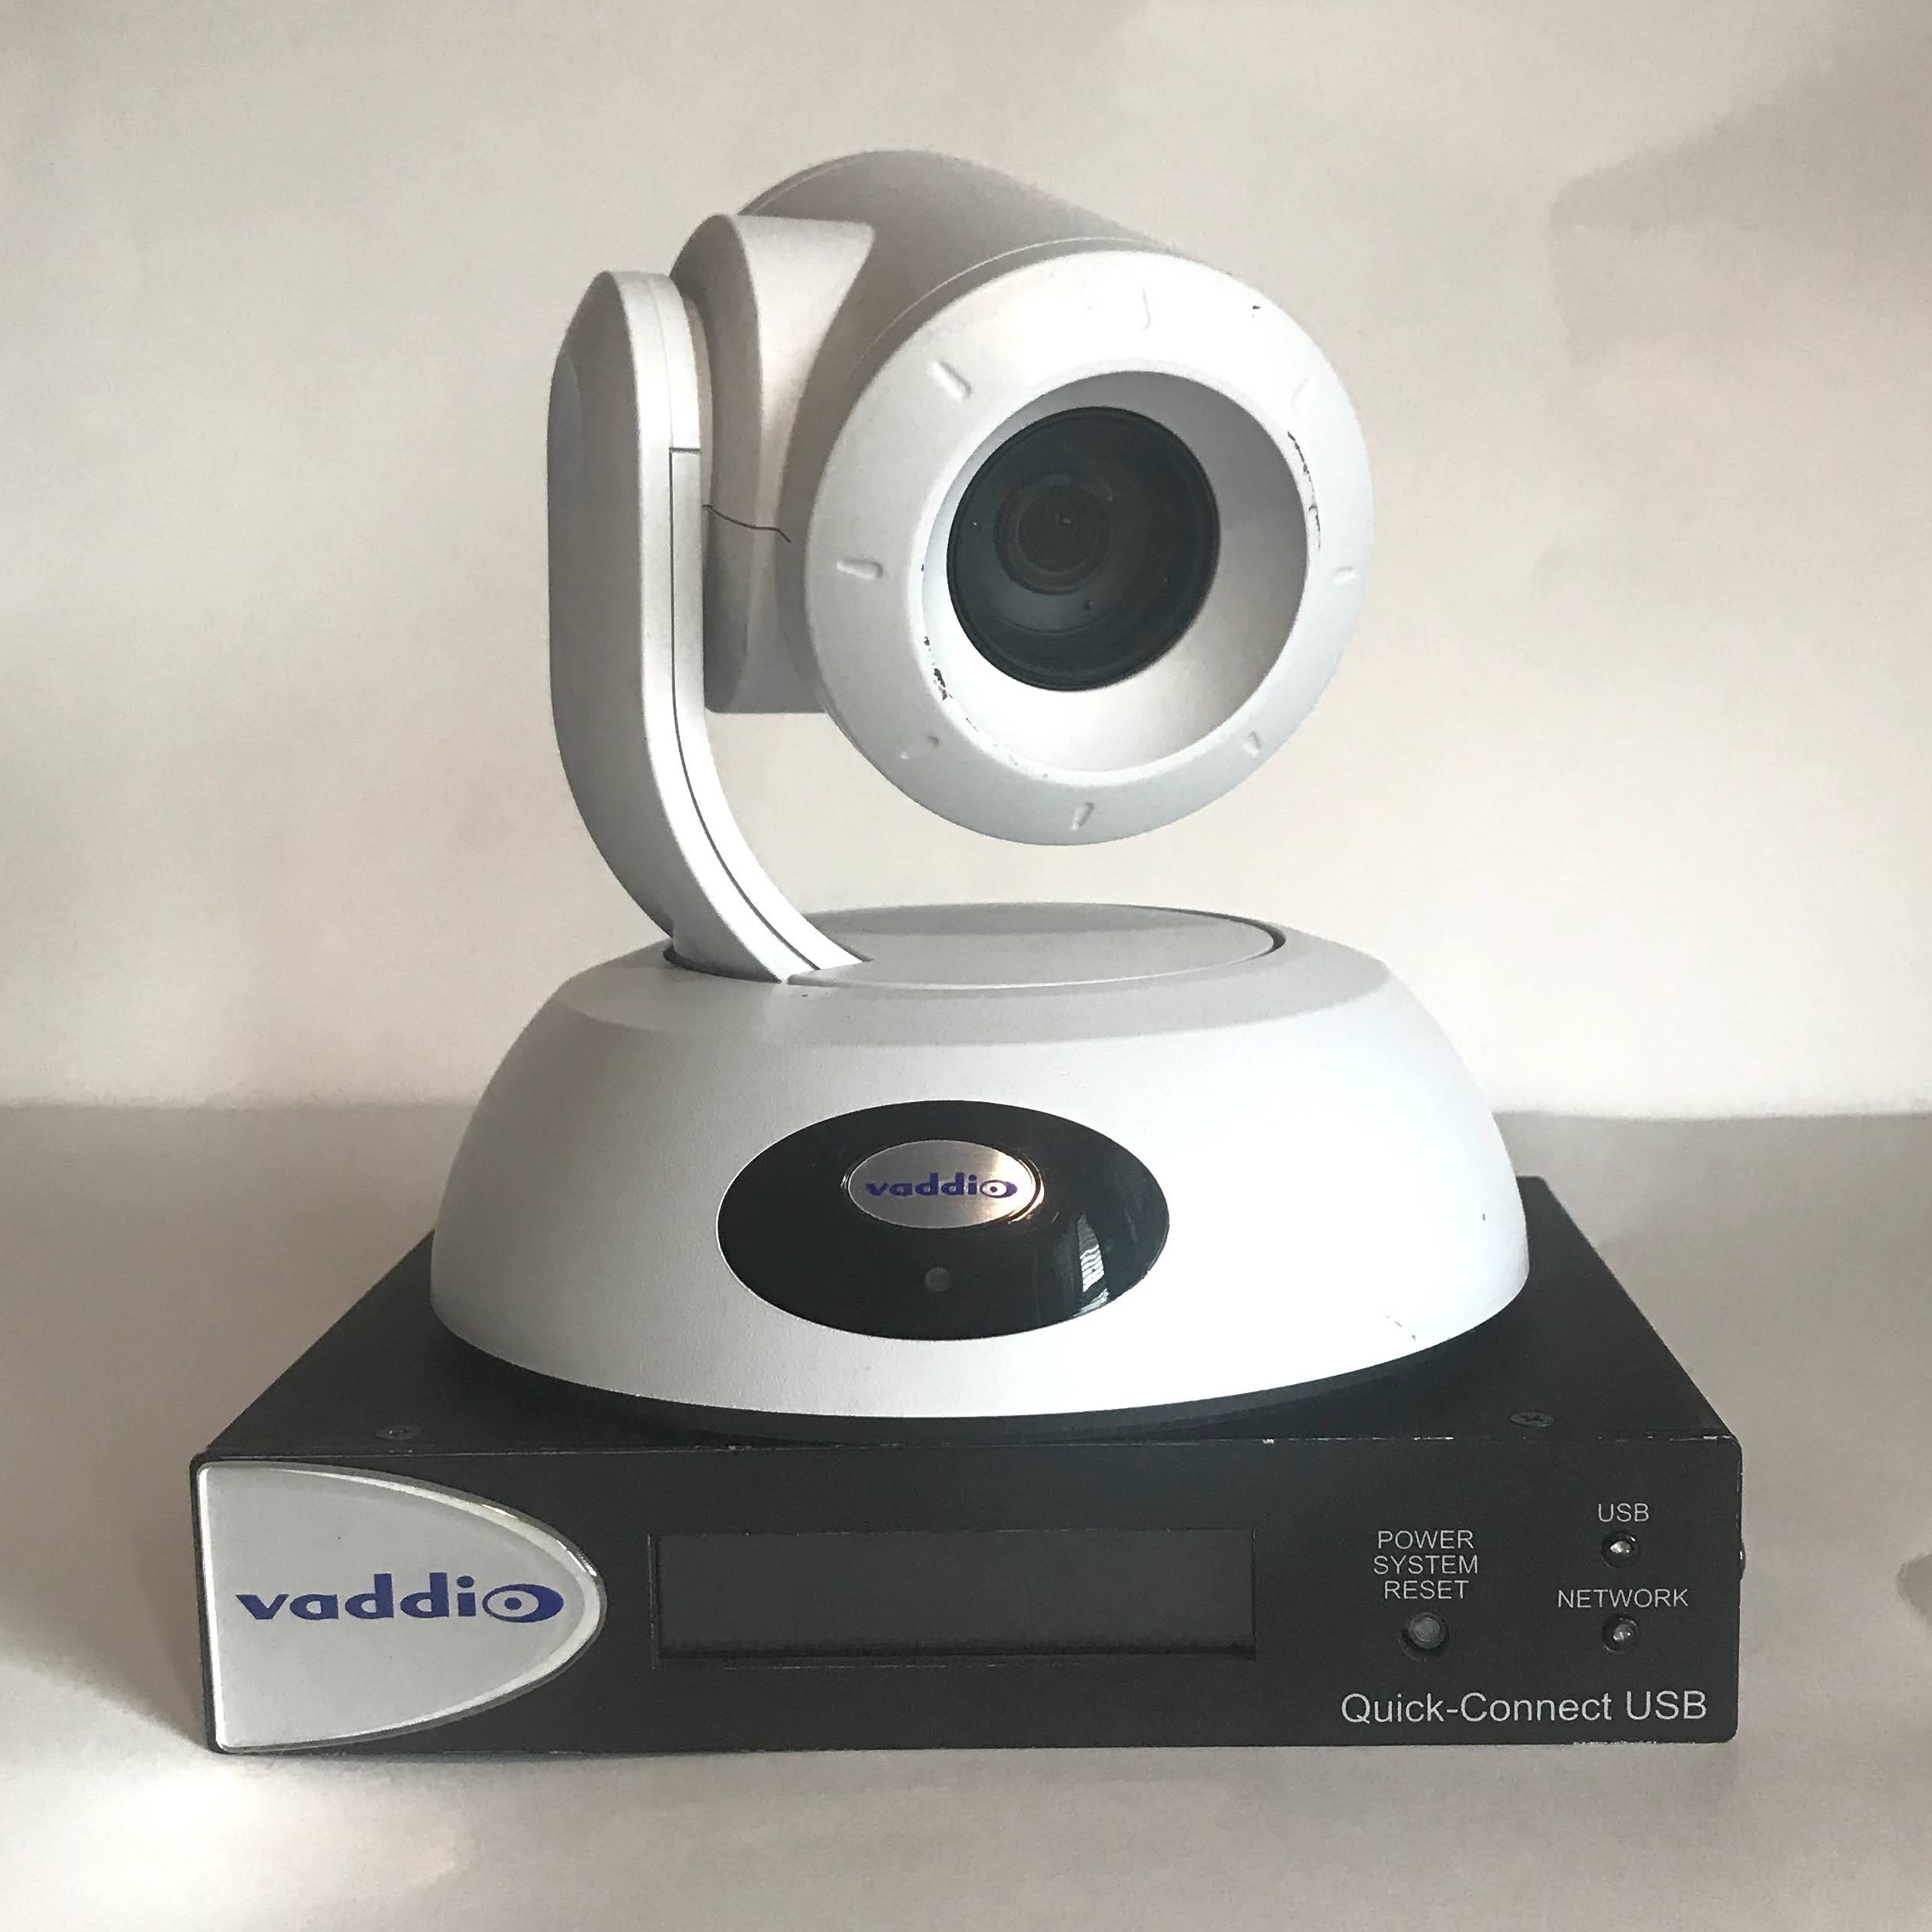 Vaddio RoboSHOT 30 HDMI PTZ Robo Camera System (White) with HDMI Interface